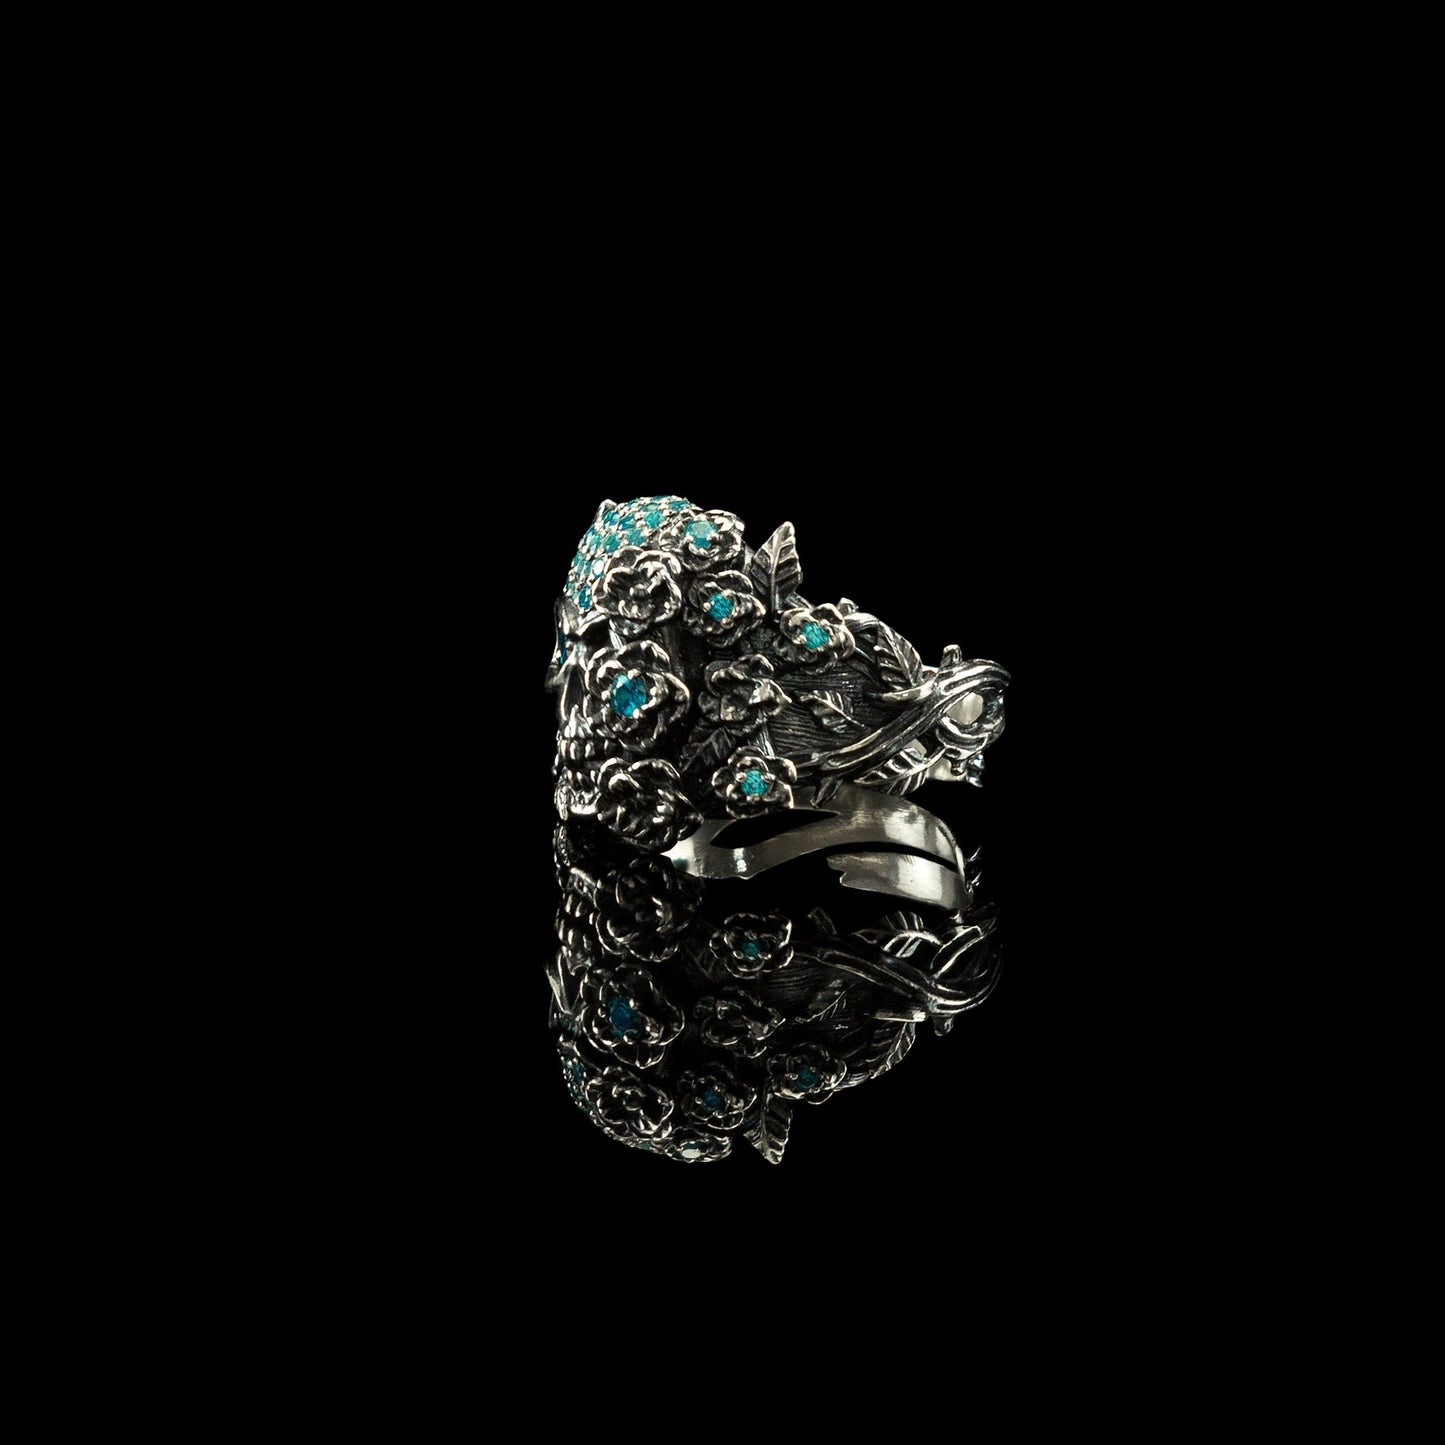 Blue women's skull ring Adjustable silver skull ring Blue gemstones Silver skull ring Skull with flowers